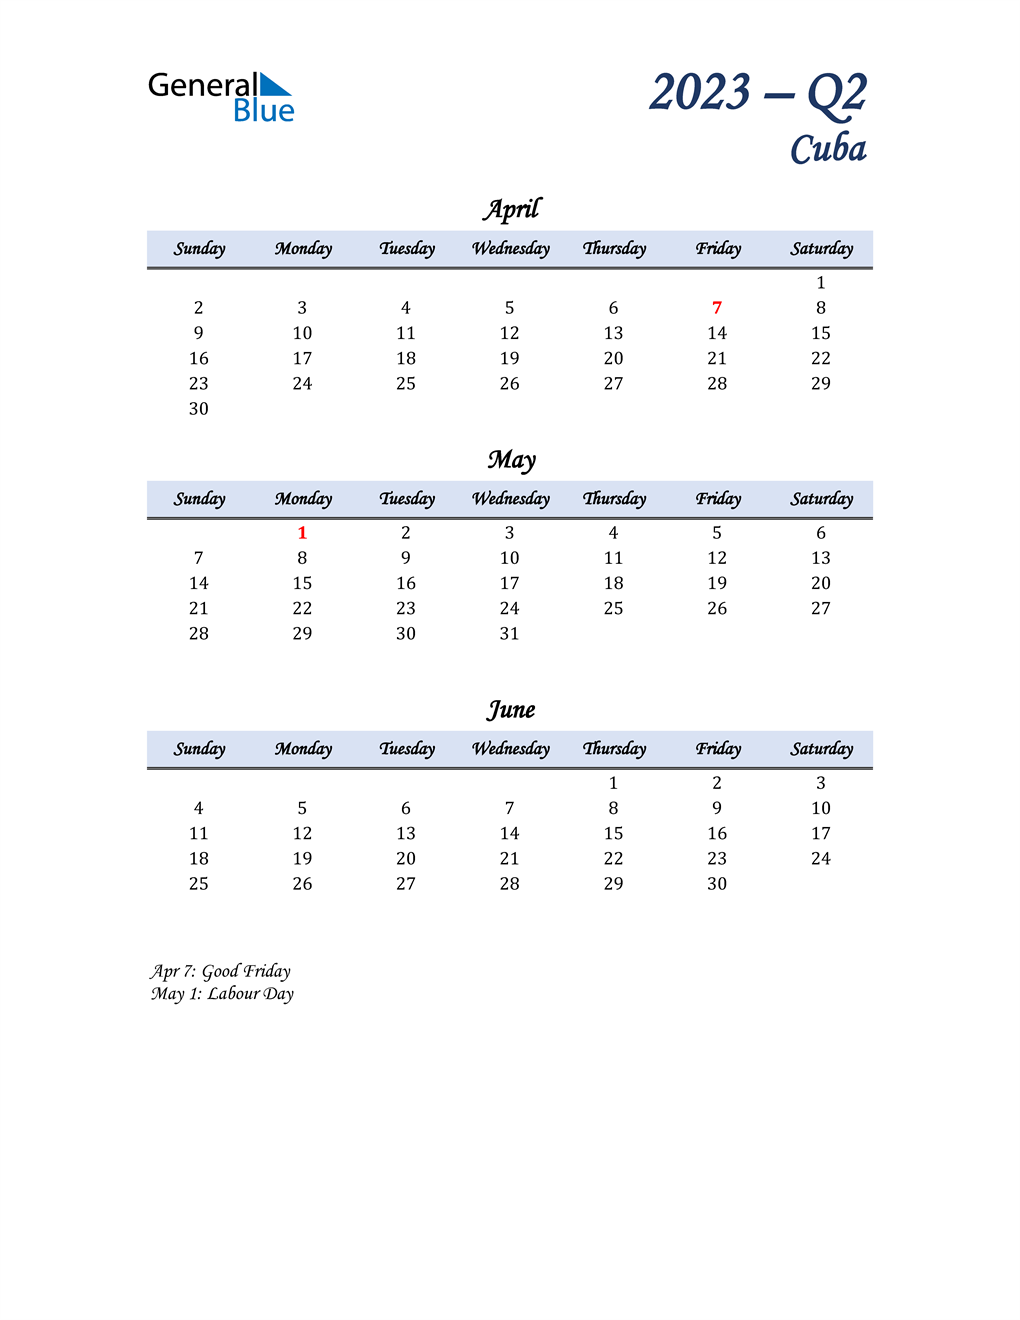  April, May, and June Calendar for Cuba